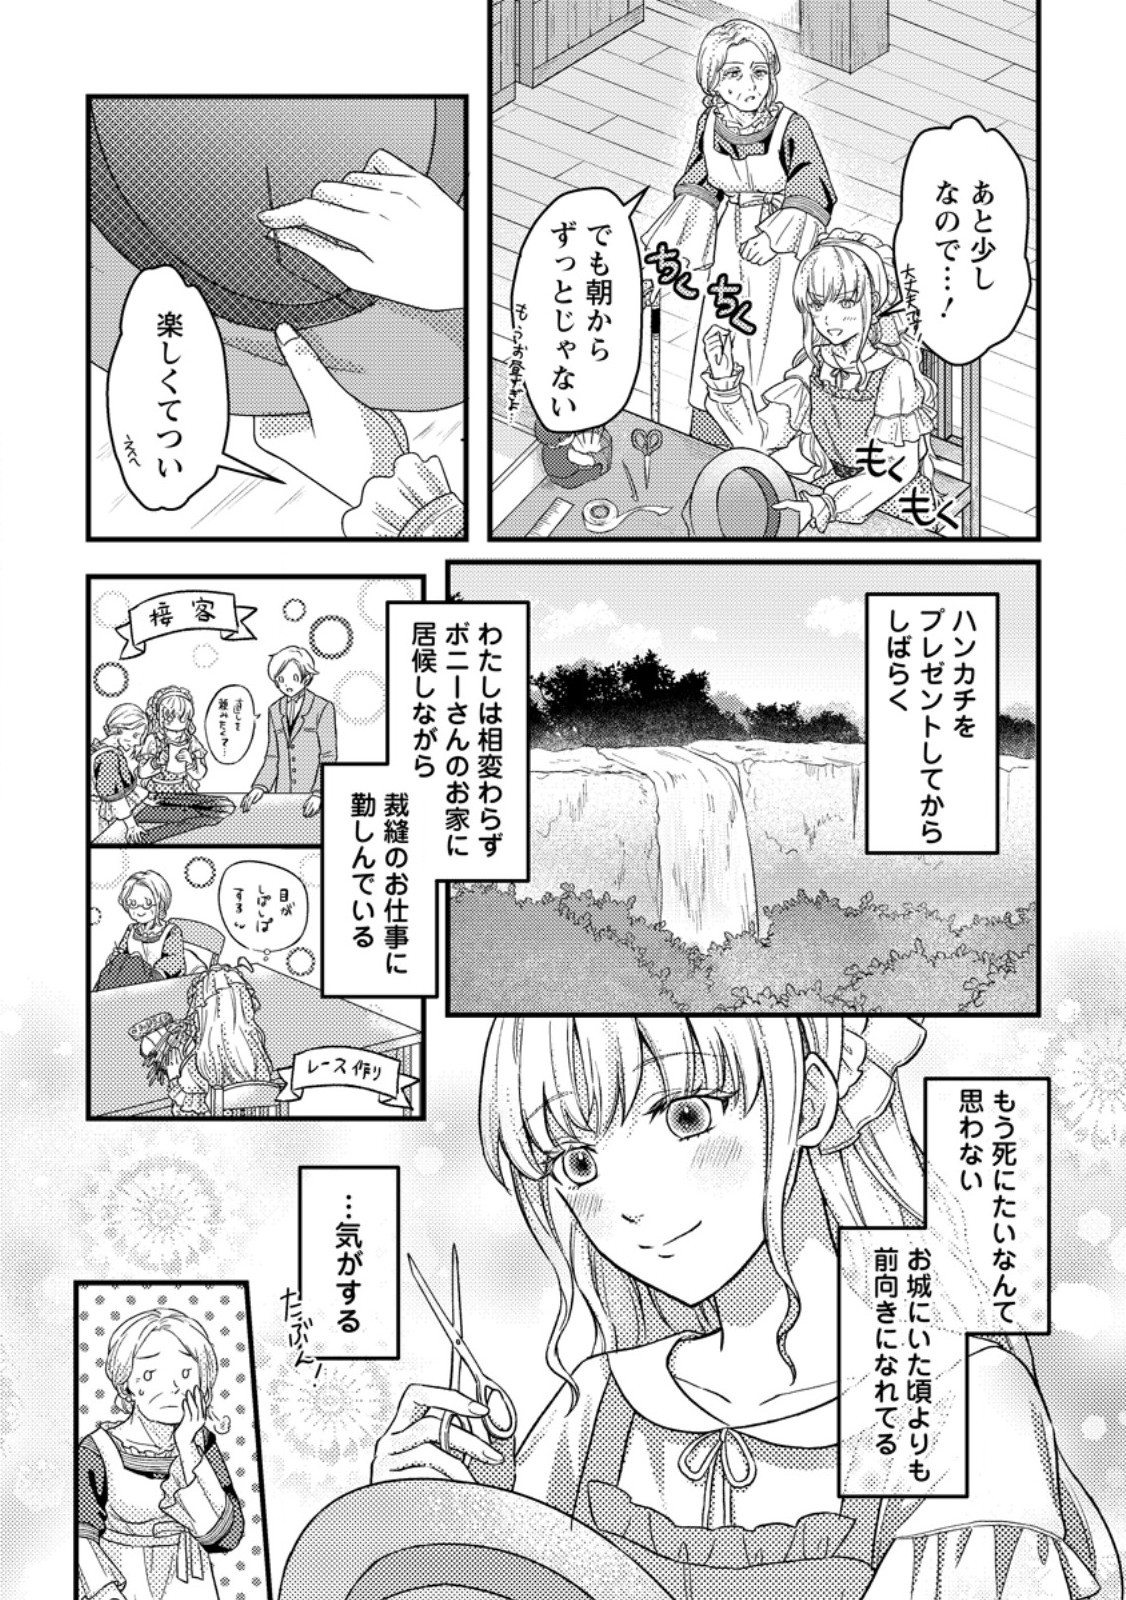 Noroware Reijou No Shiawase Sagashi - Chapter 4.1 - Page 2